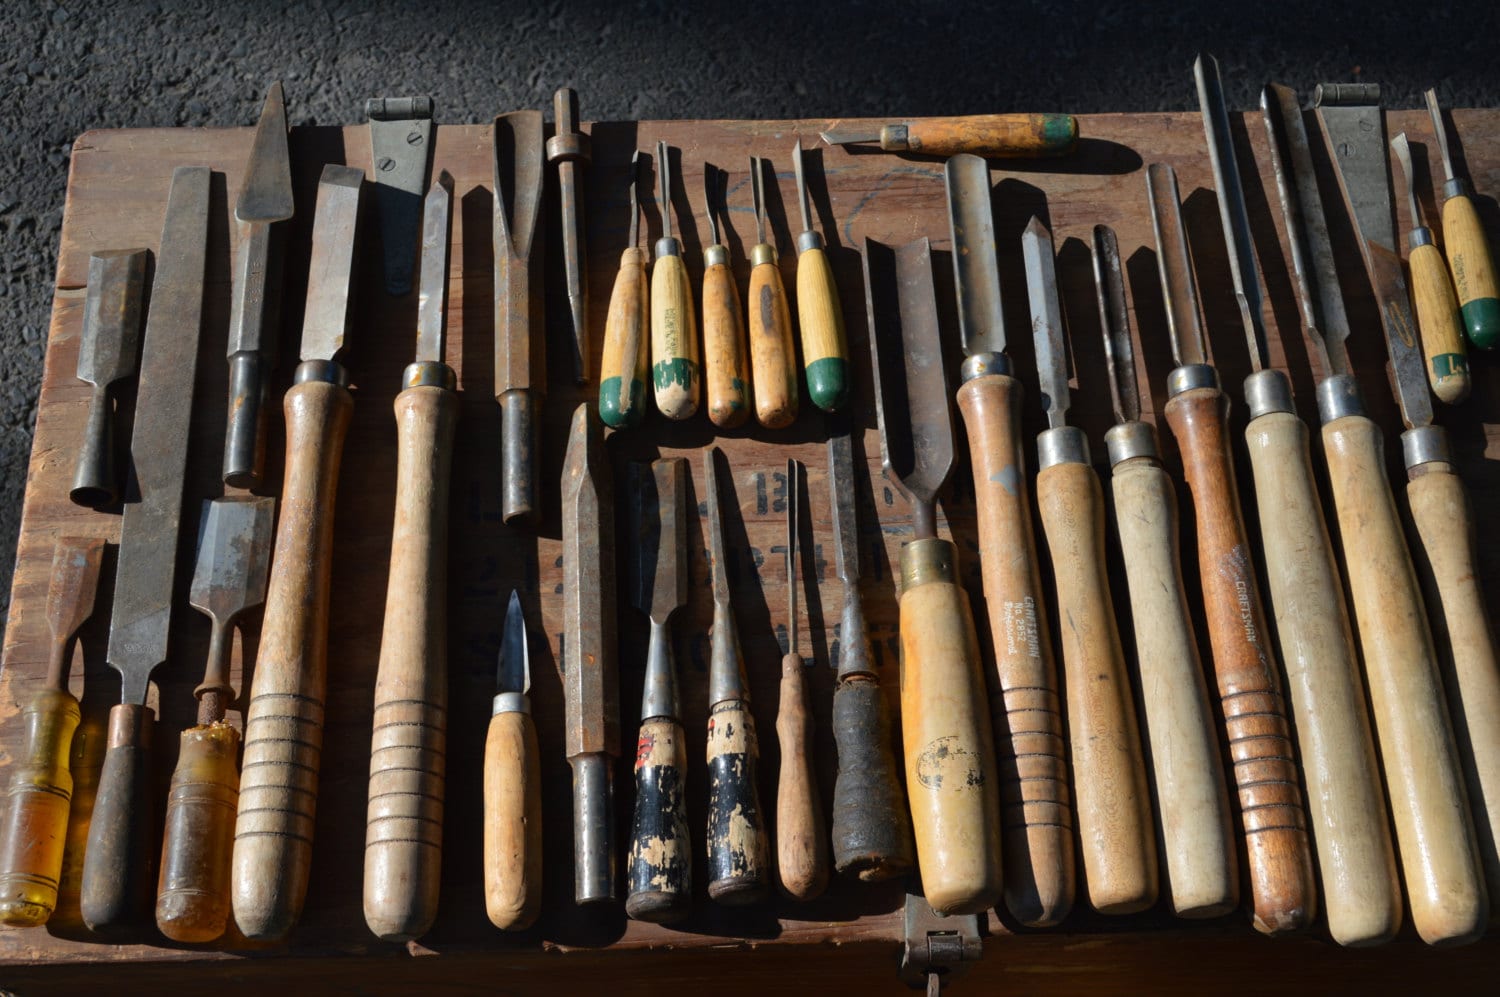 Wood Working Tools Wood Carving Tools Vintage Tools home